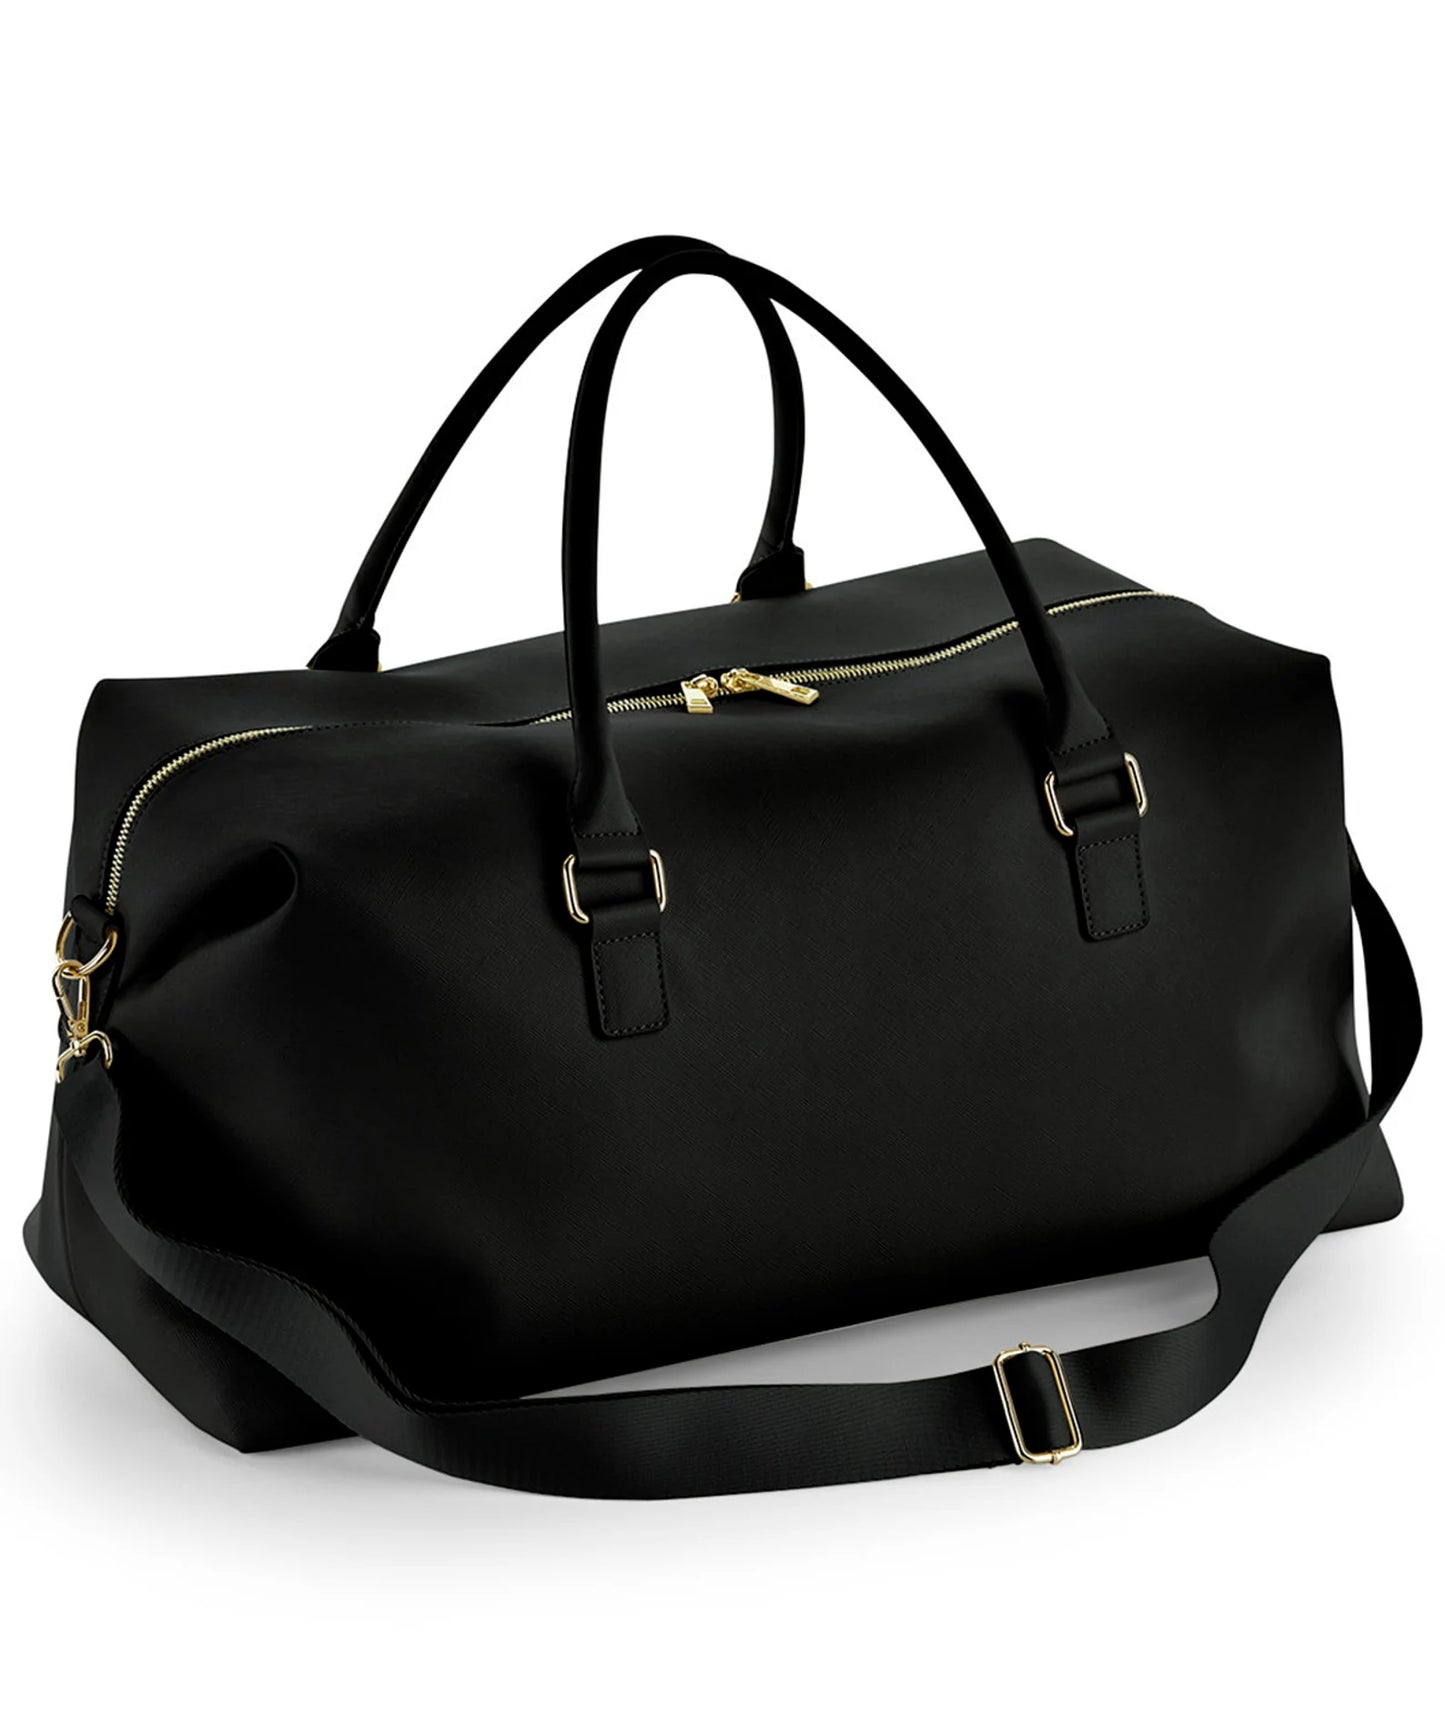 Personalised holdall, Travel Bag, Luggage Bag, Weekend Bag, Hospital Bag